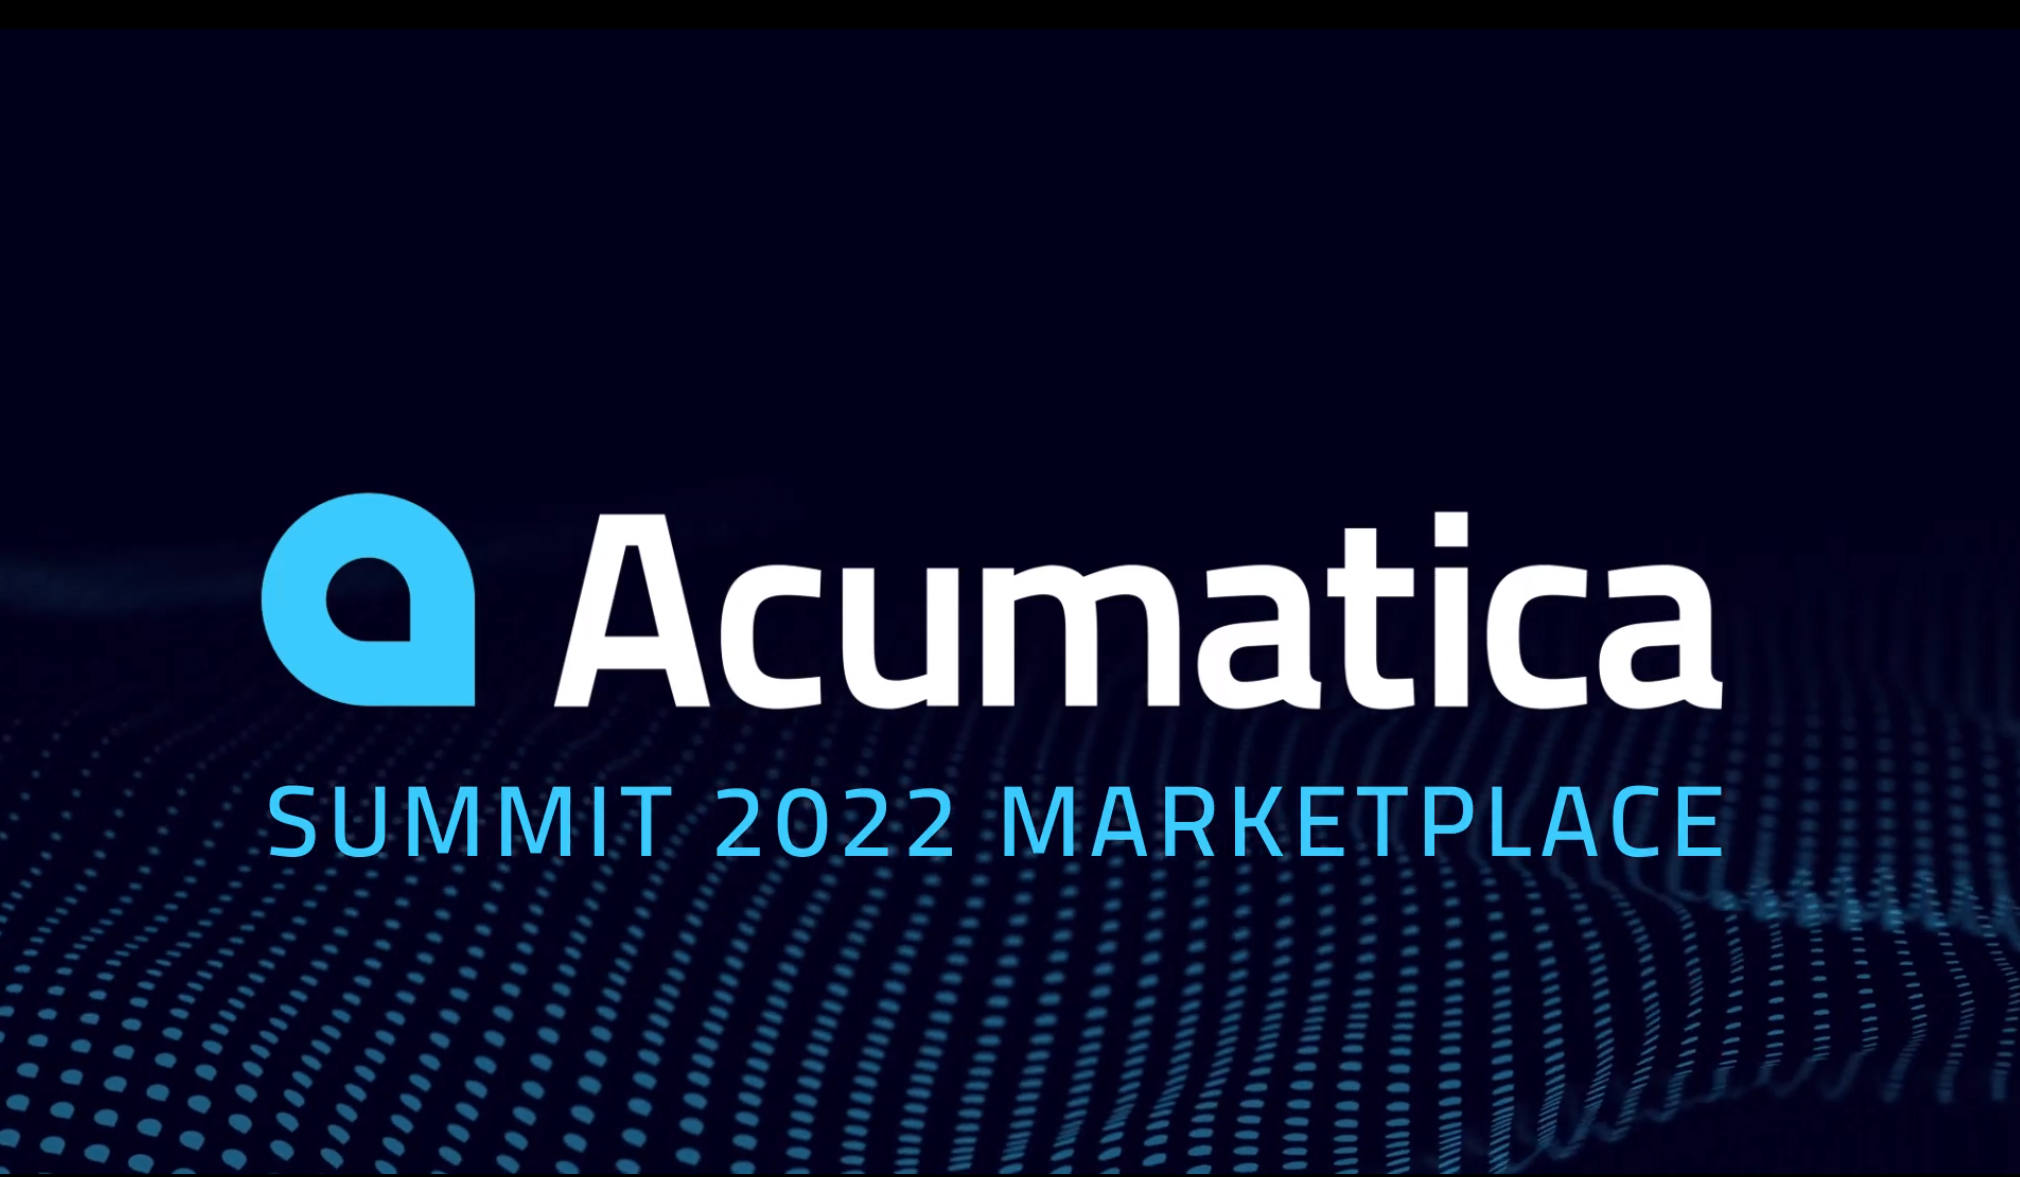 Acumatica Summit 2022 Marketplace Promo